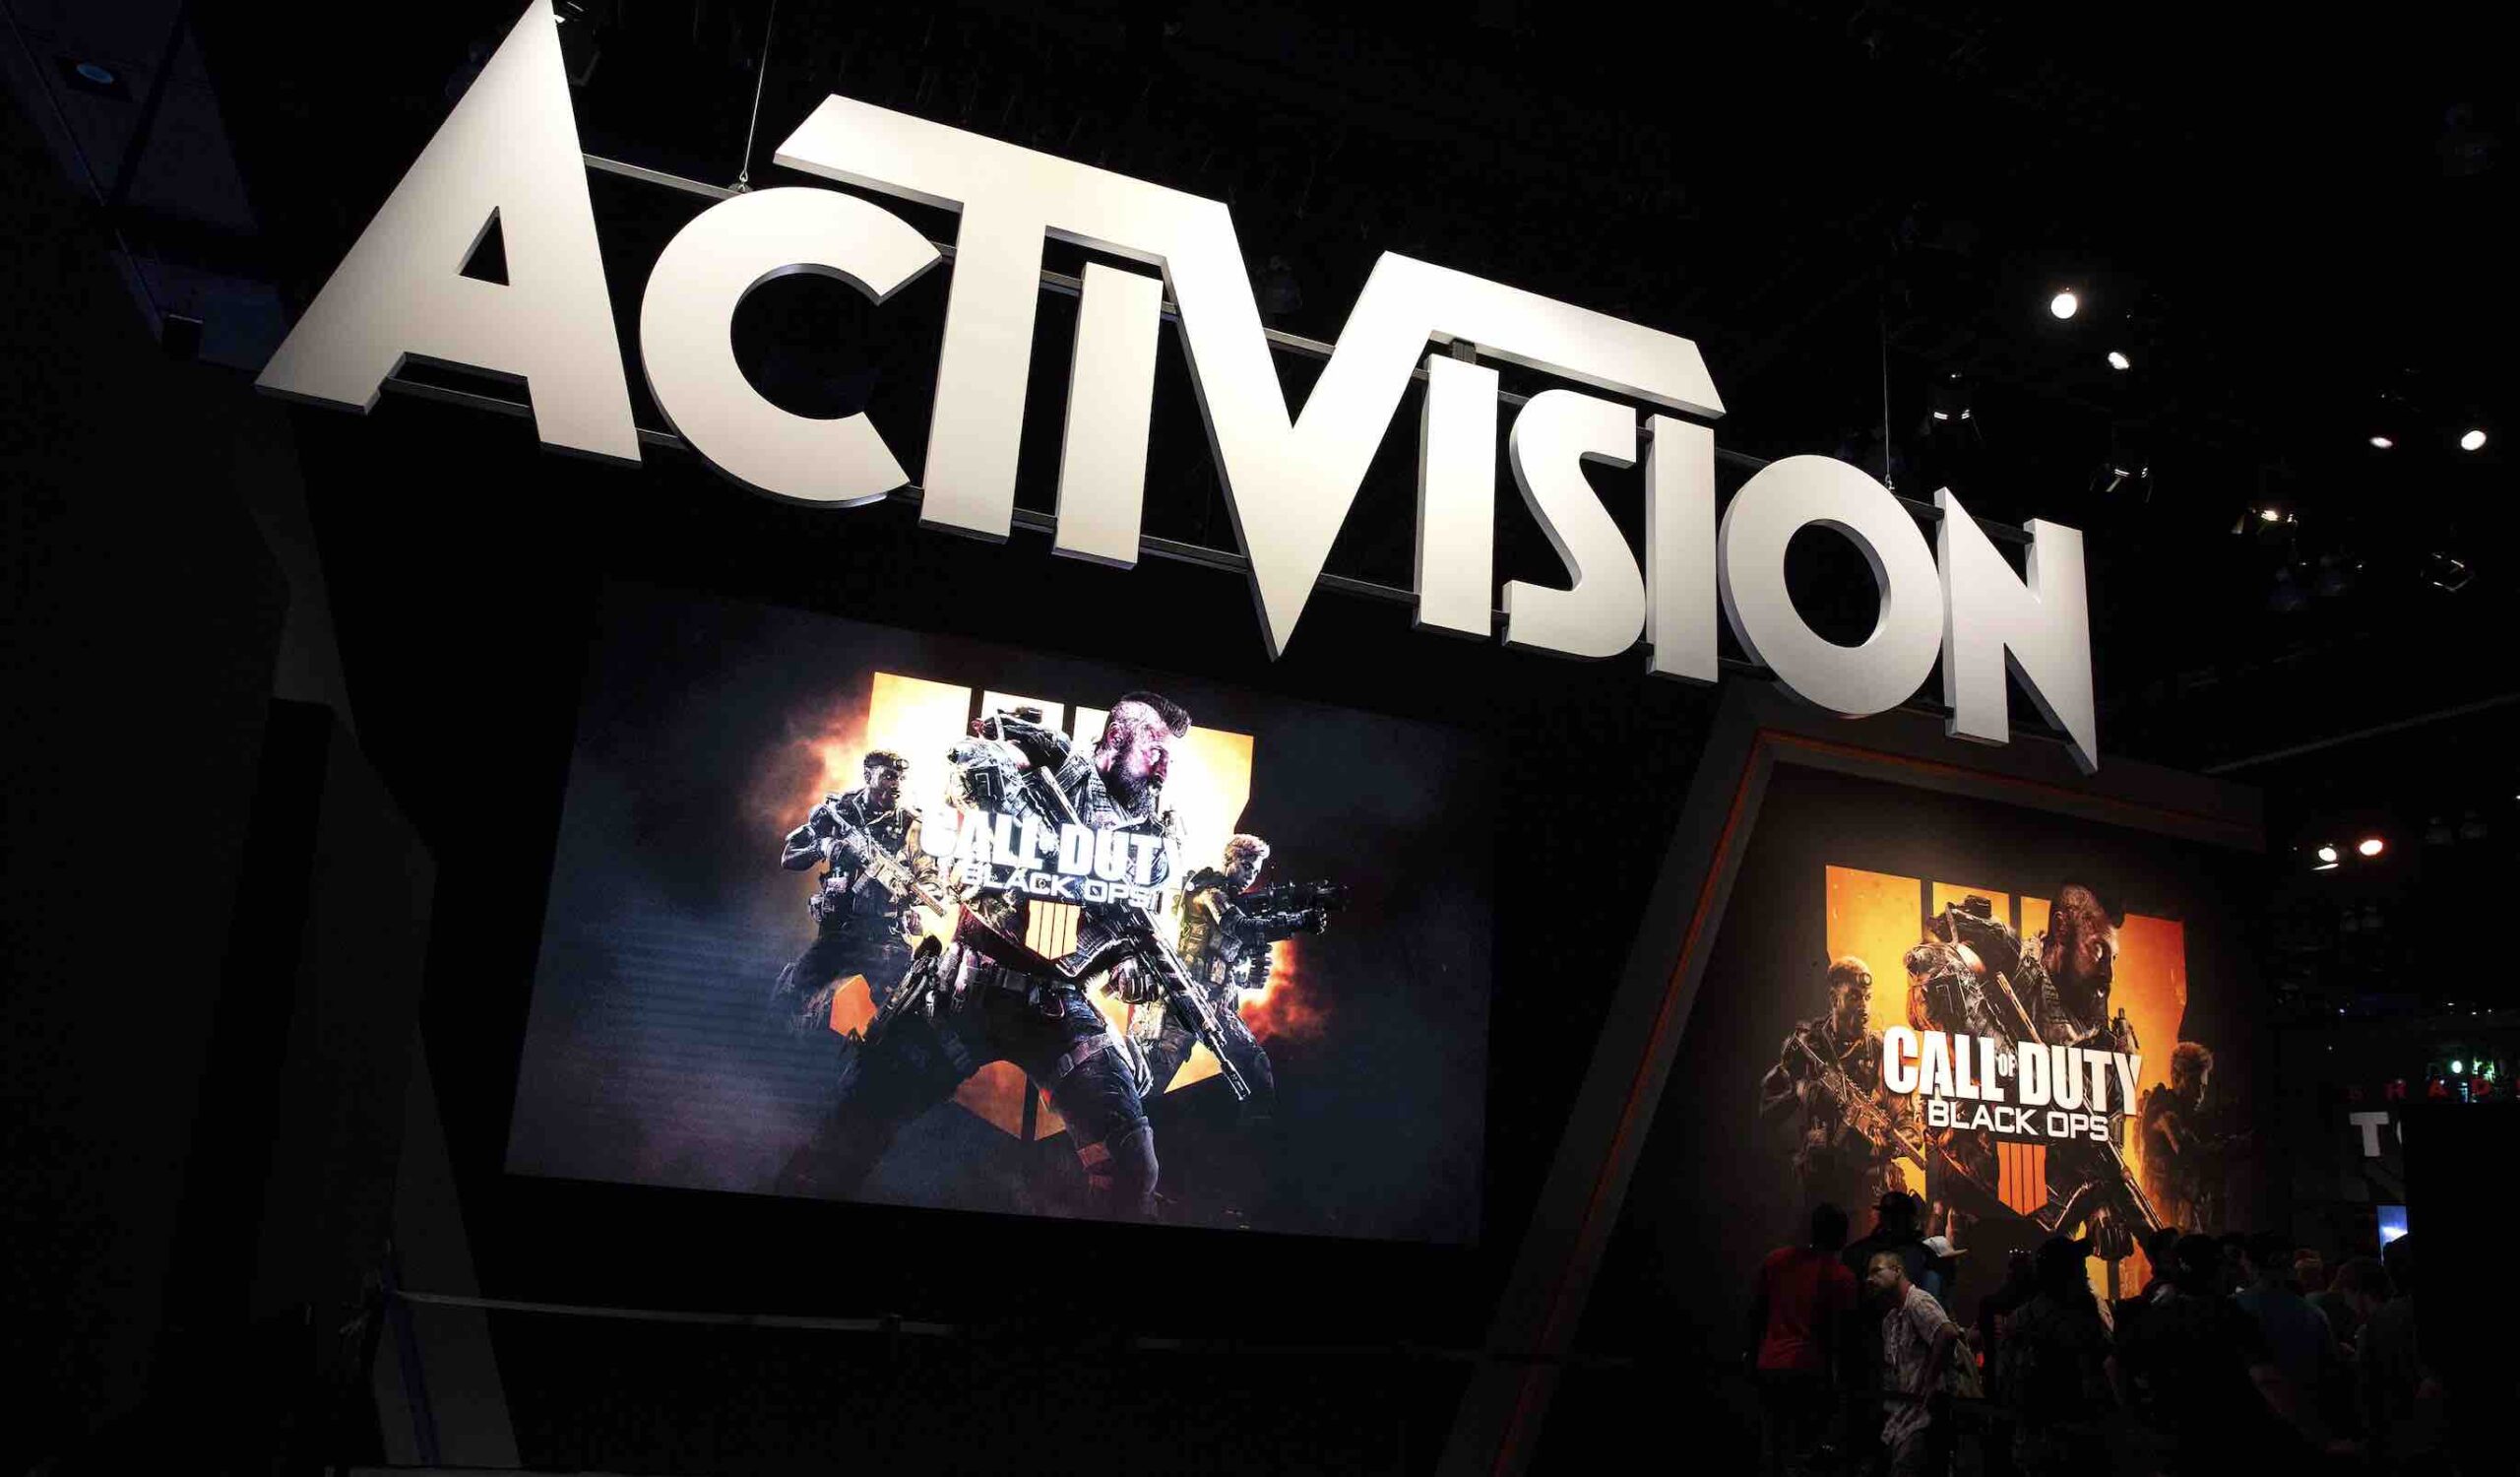 Activision Microsoft